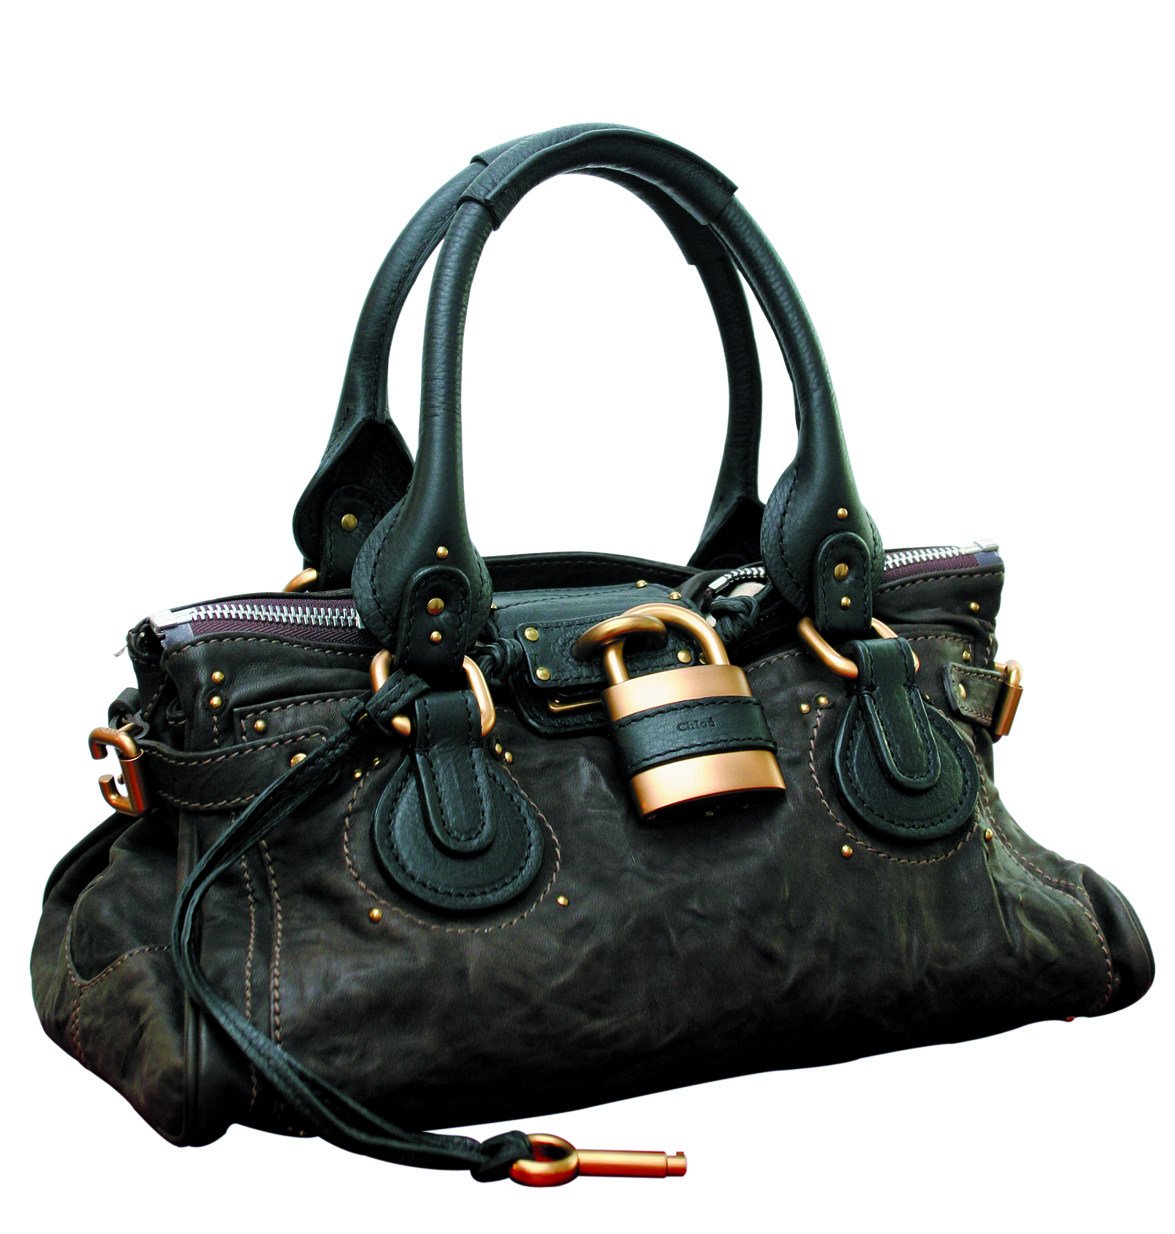 The Paddington handbag by Chloé.